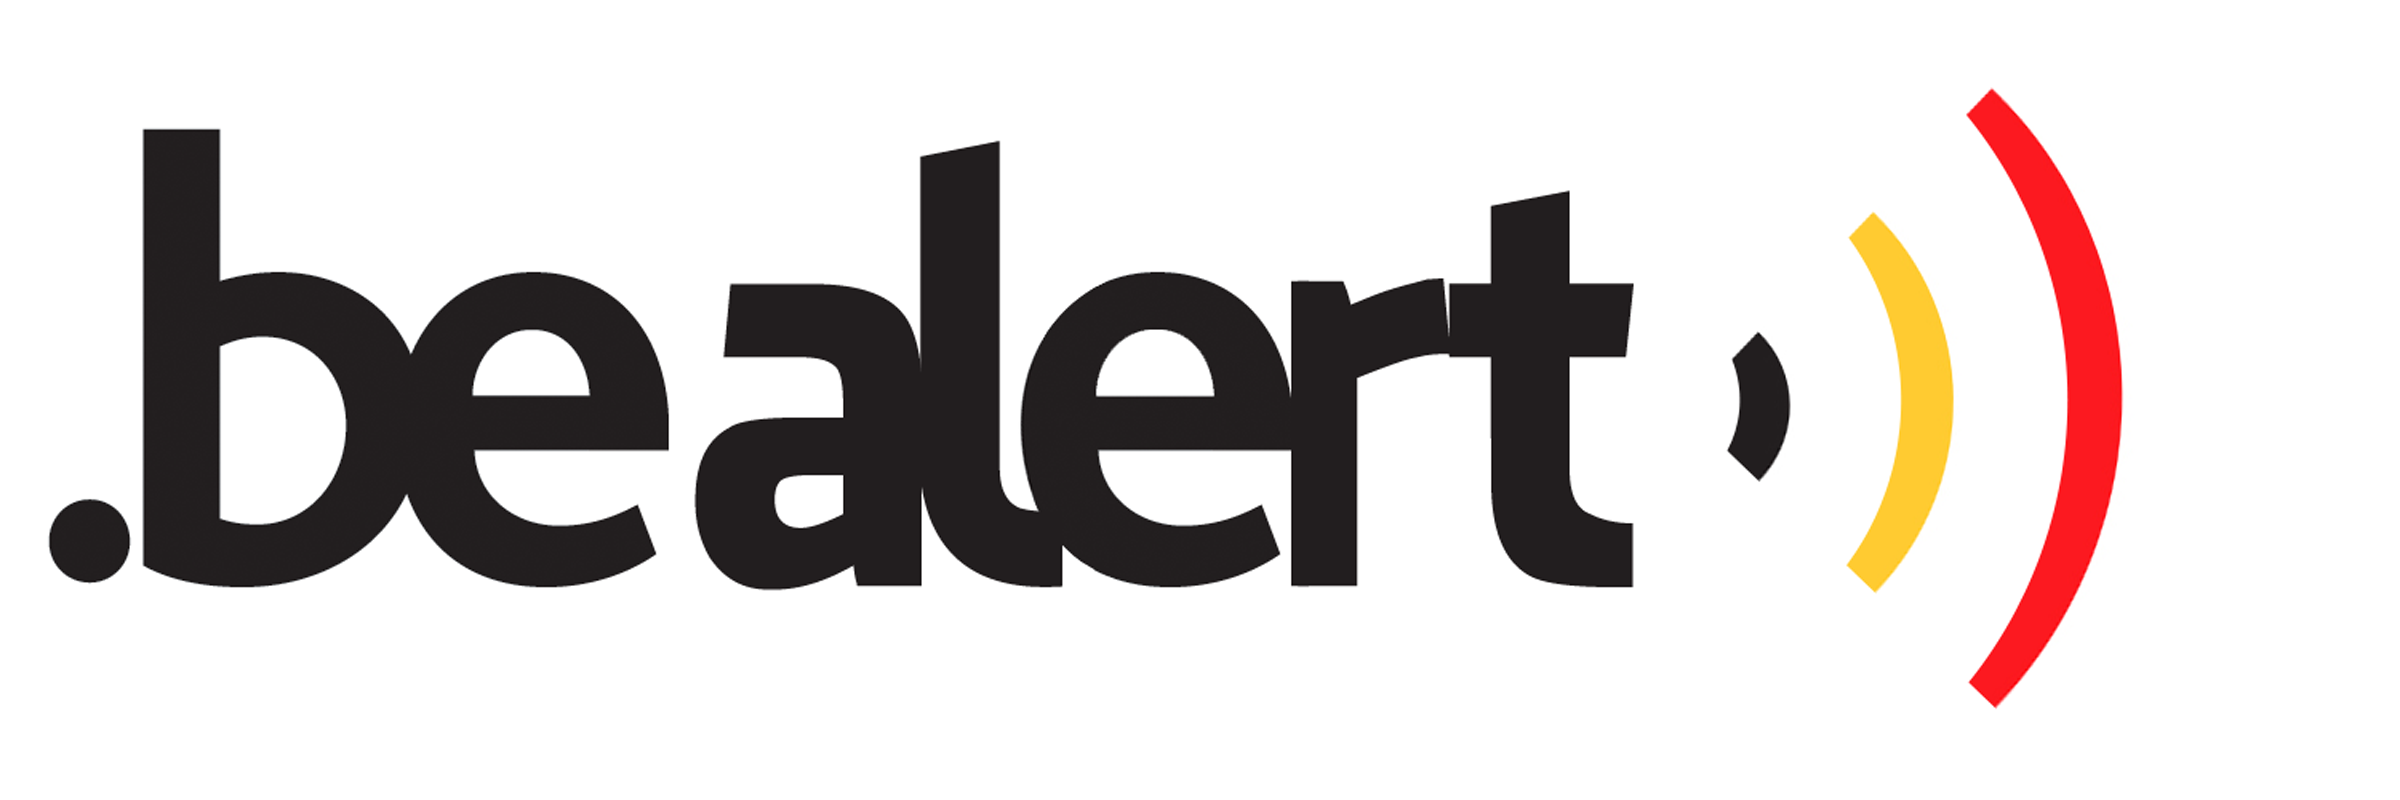 Be Alert logo